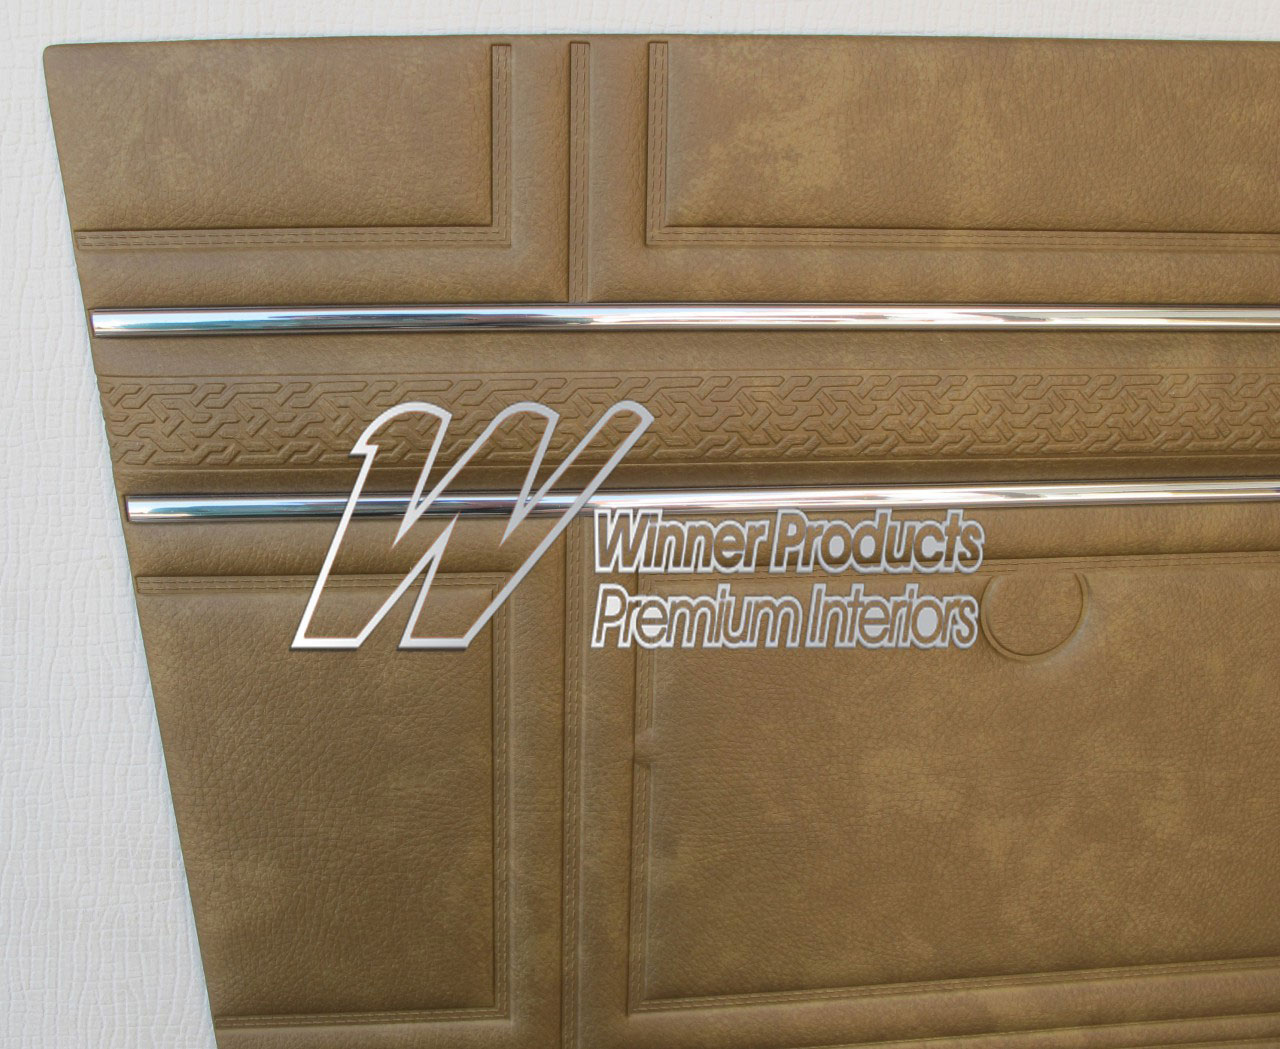 Holden Kingswood HT Kingswood Wagon 11E Antique Gold Door Trims (Image 3 of 3)